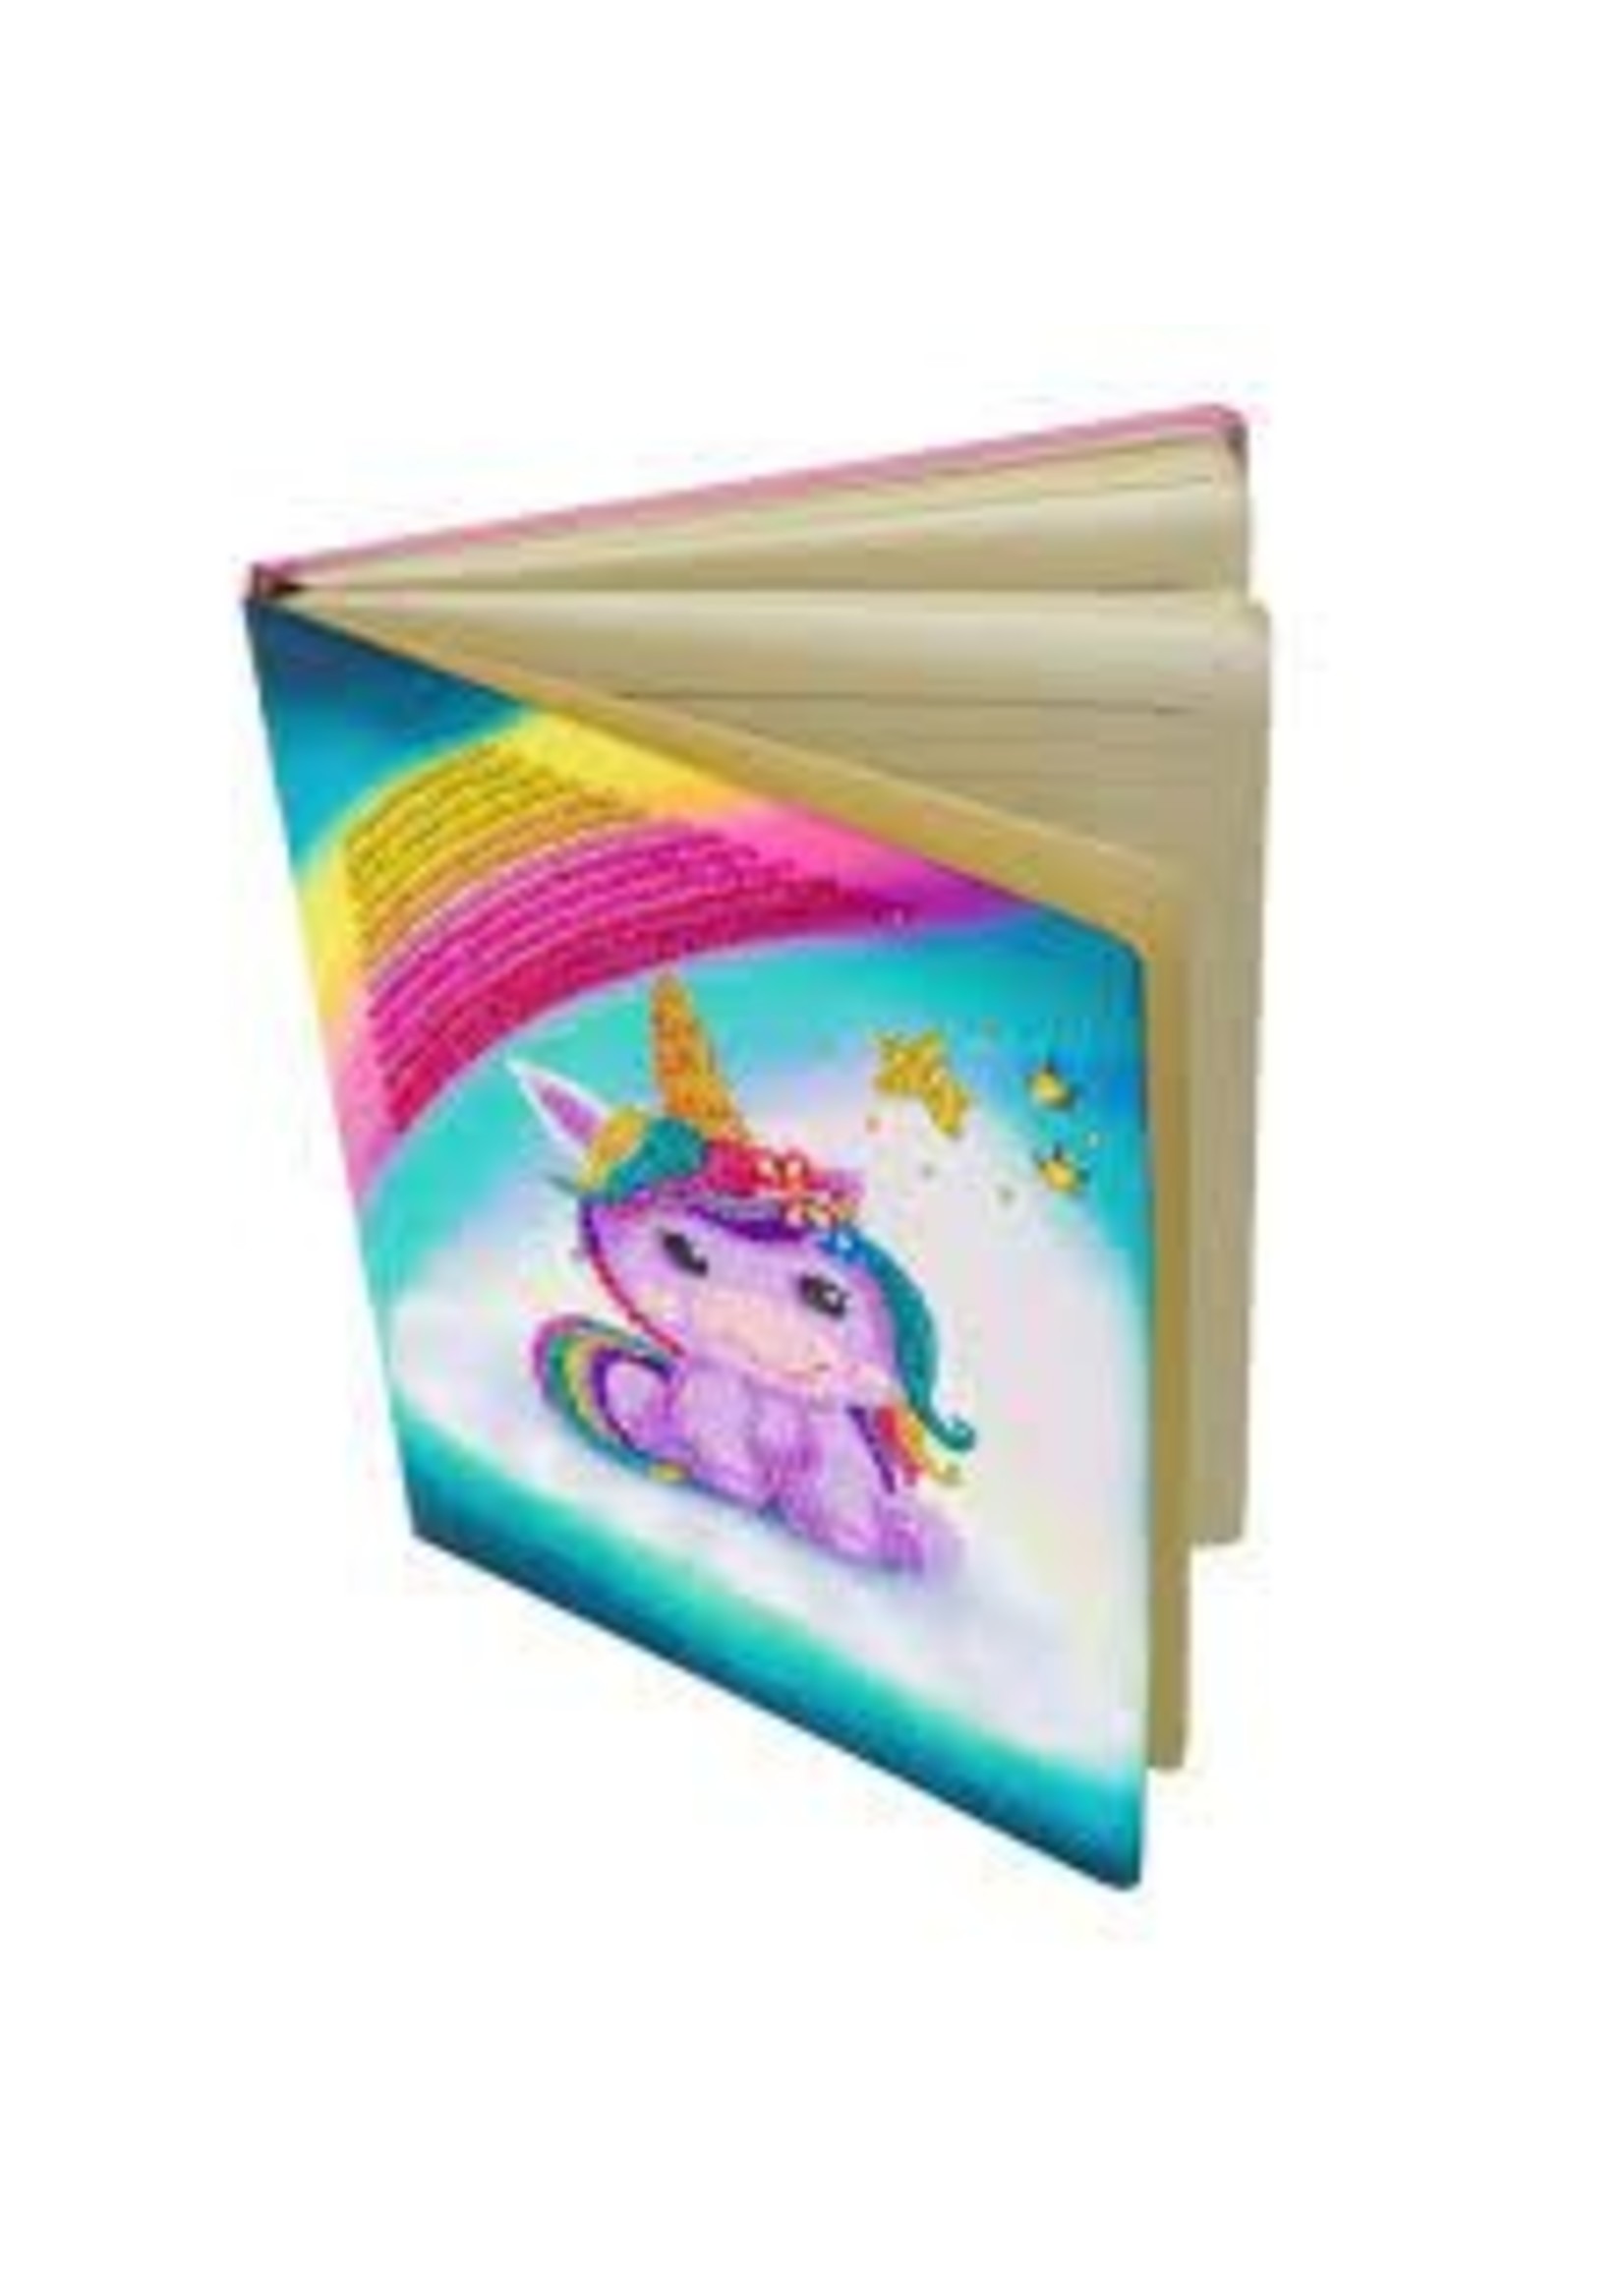 Craft Buddy Unicorn Smile Crystal Art Design Kit